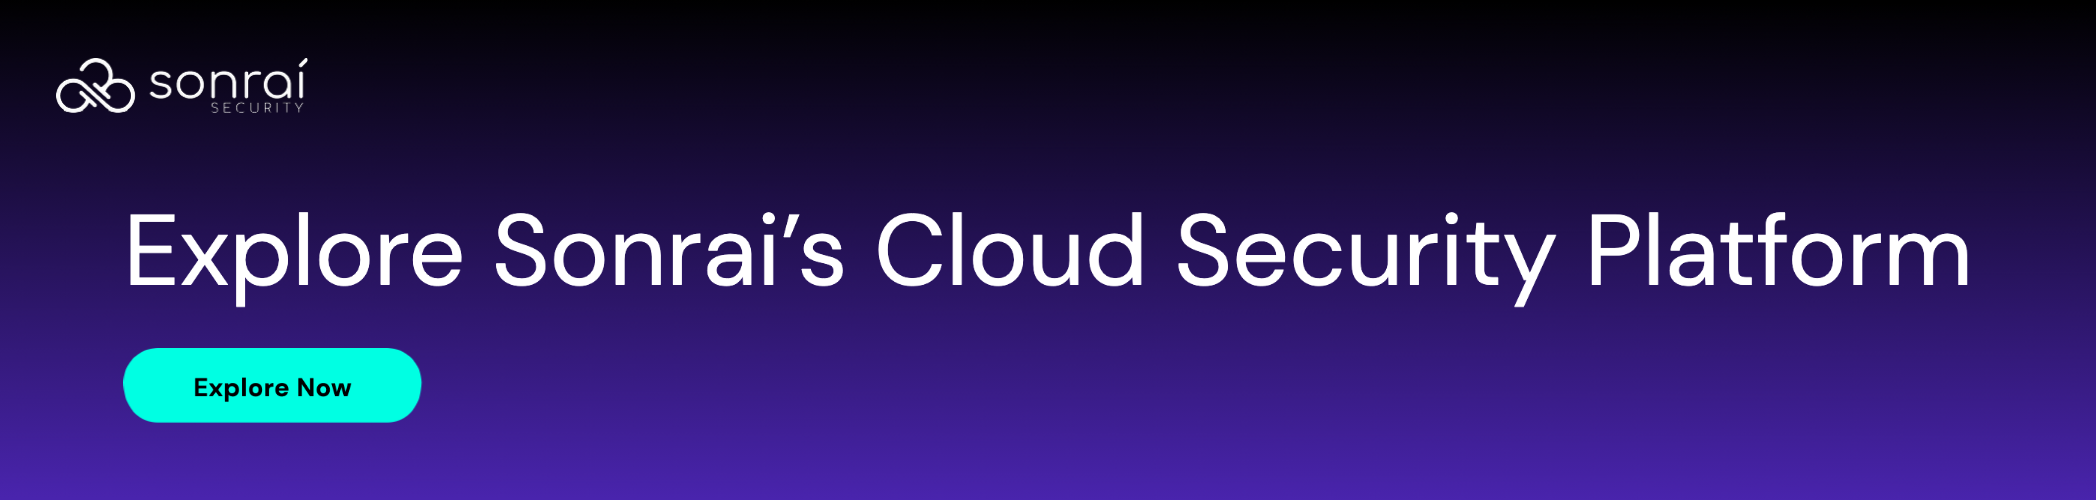 cloud security platform banner